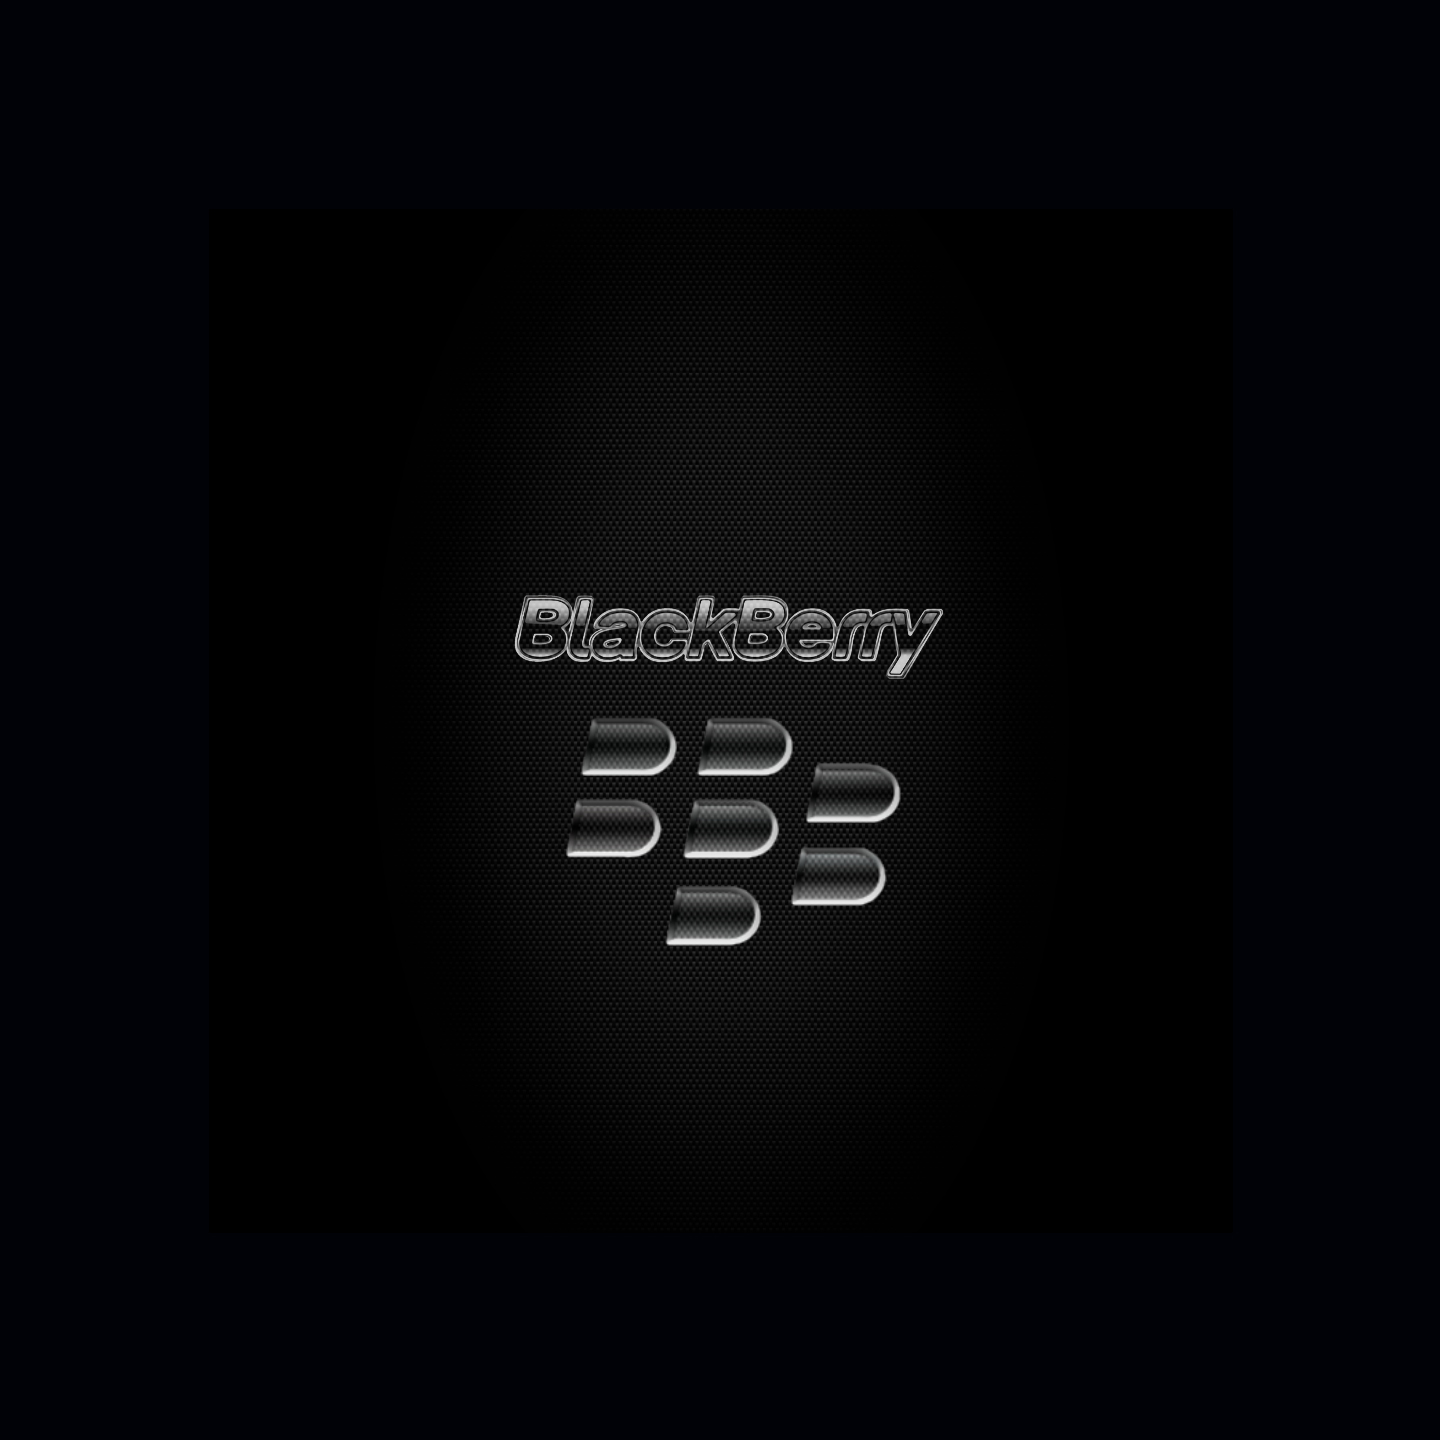 46+] BlackBerry Passport Wallpapers HD - WallpaperSafari